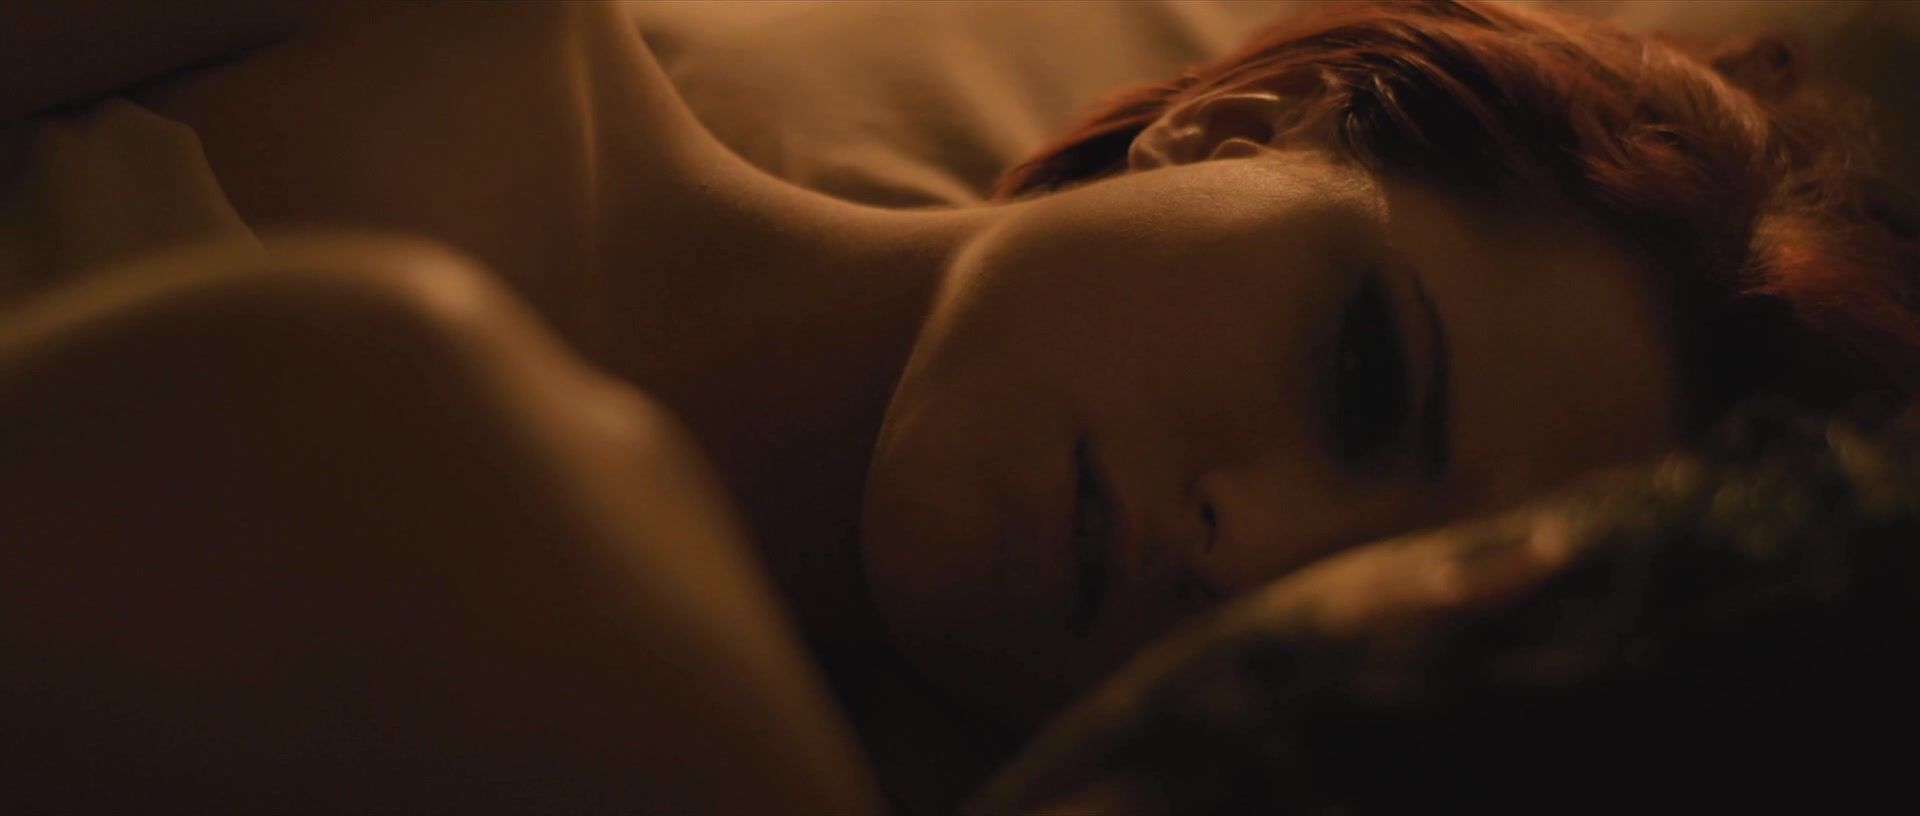 Porra Evan Rachel Wood nude - The Necessary Death of Charlie Countryman (2013) Badoo